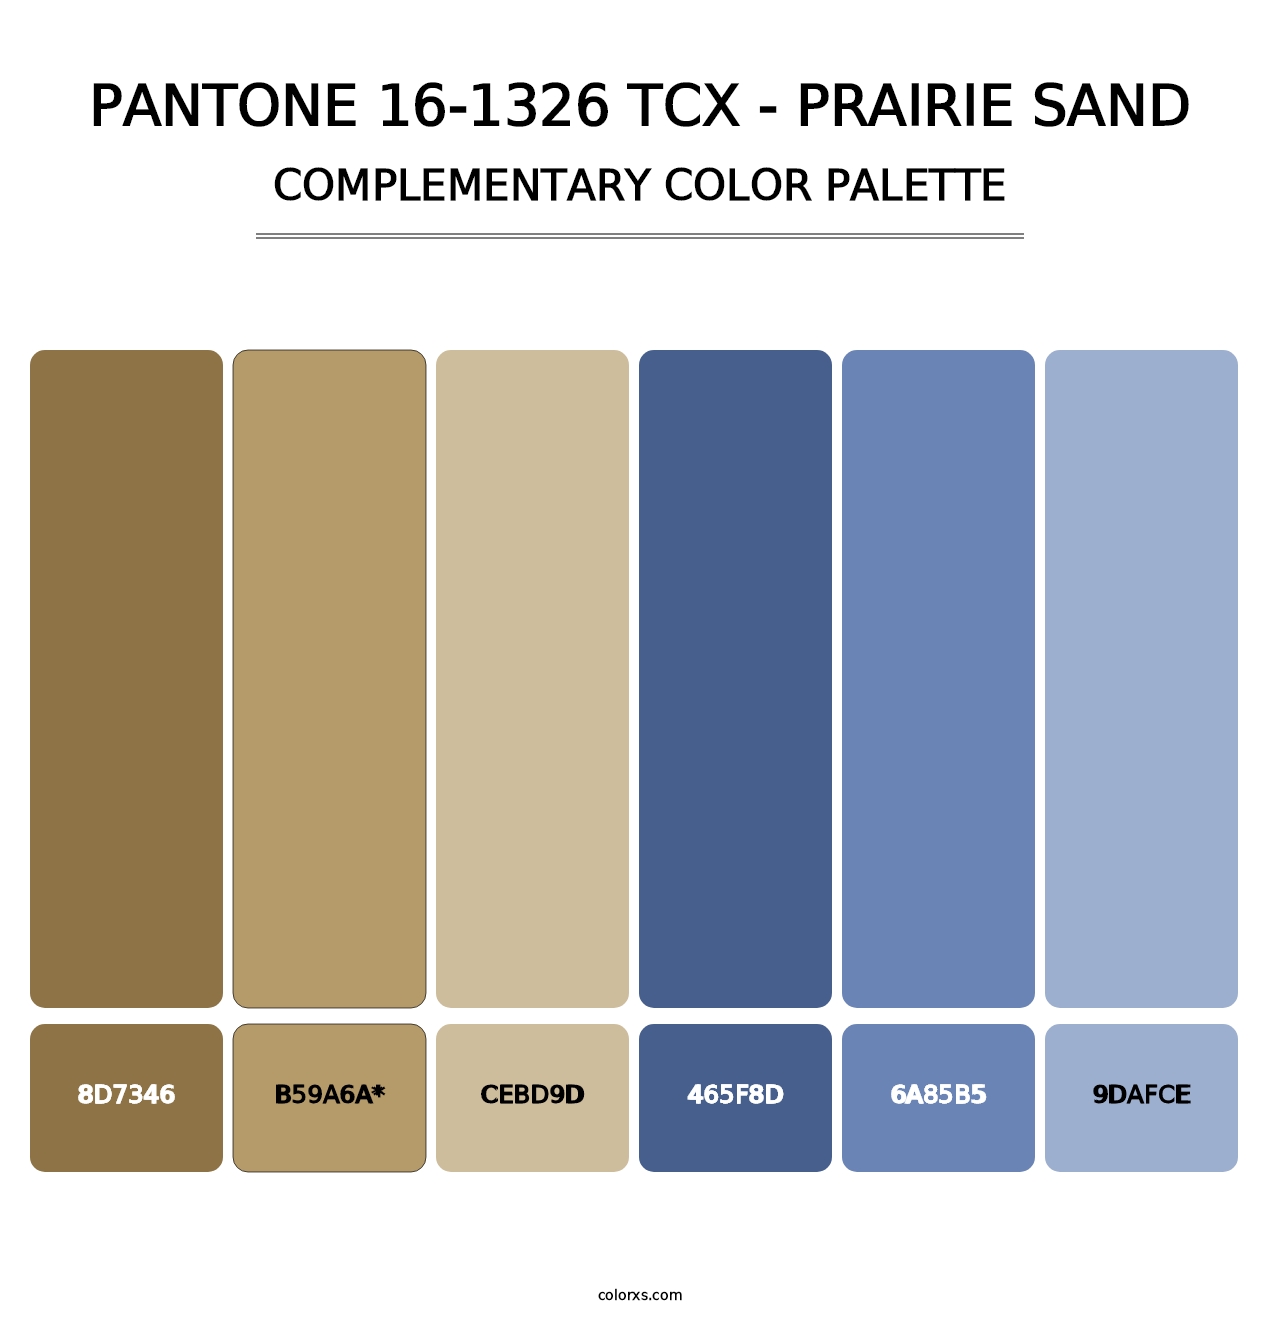 PANTONE 16-1326 TCX - Prairie Sand - Complementary Color Palette